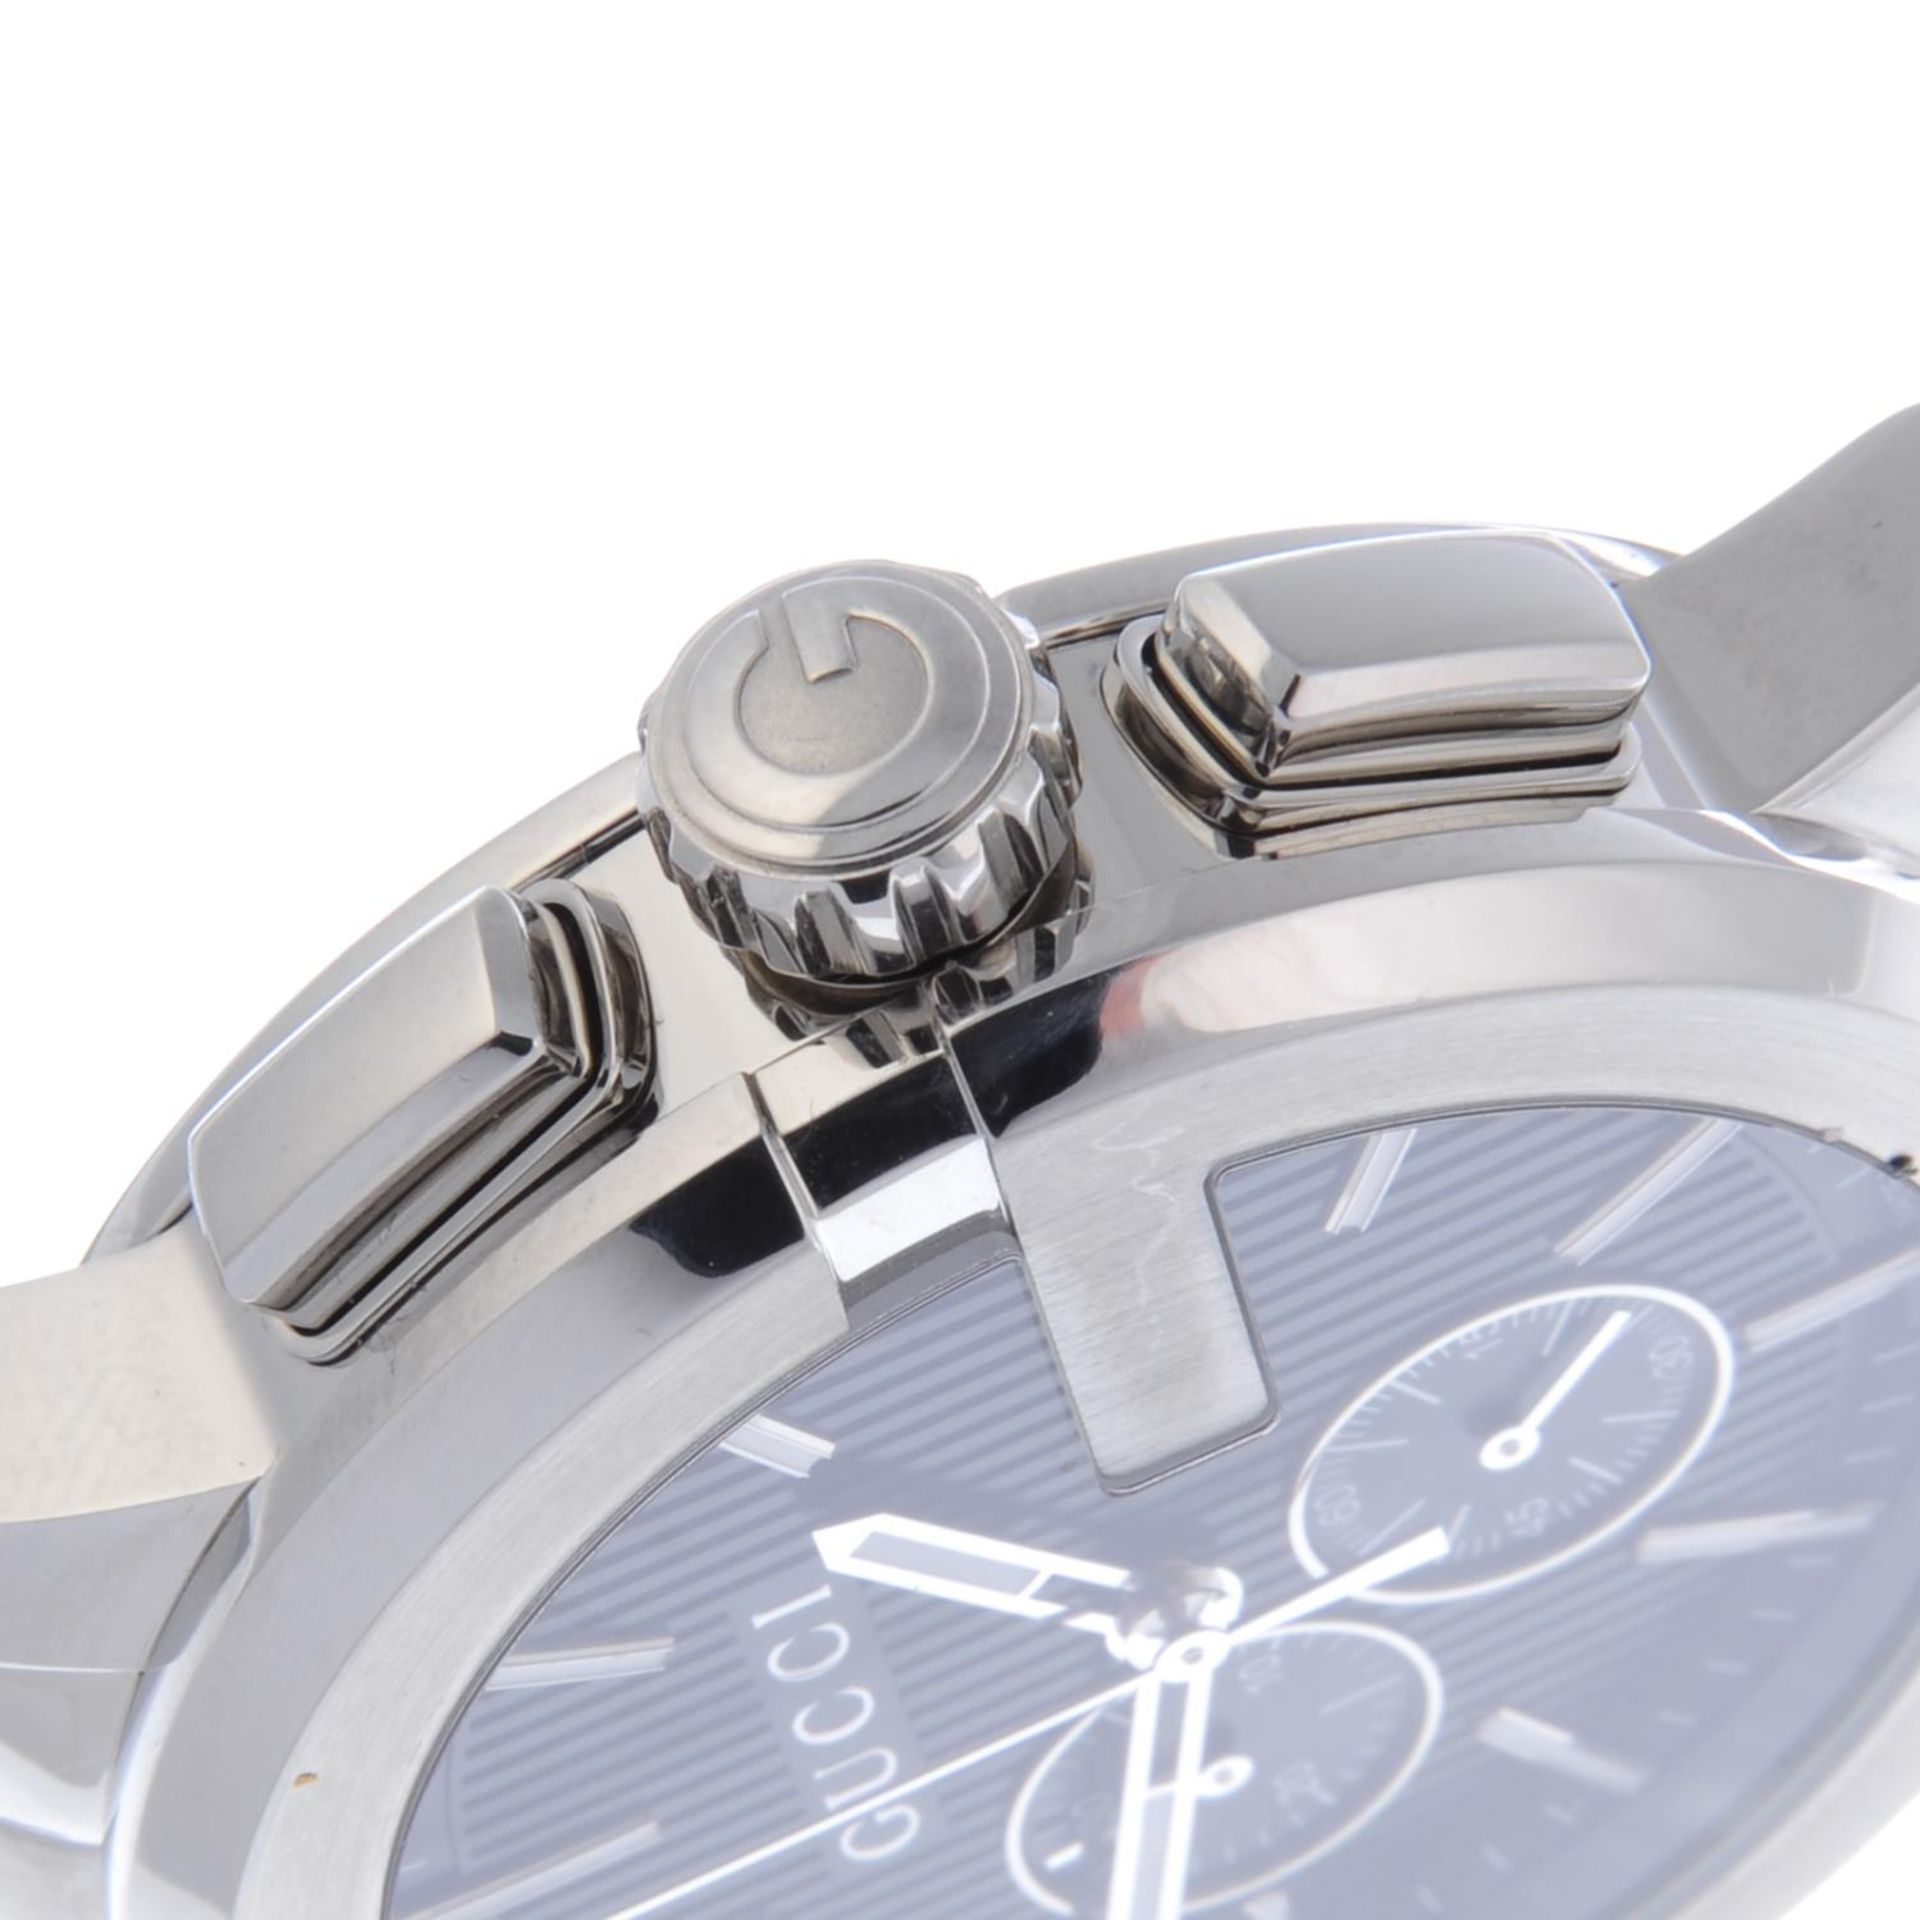 GUCCI - a gentleman's G-Chrono chronograph bracelet watch. - Image 3 of 4